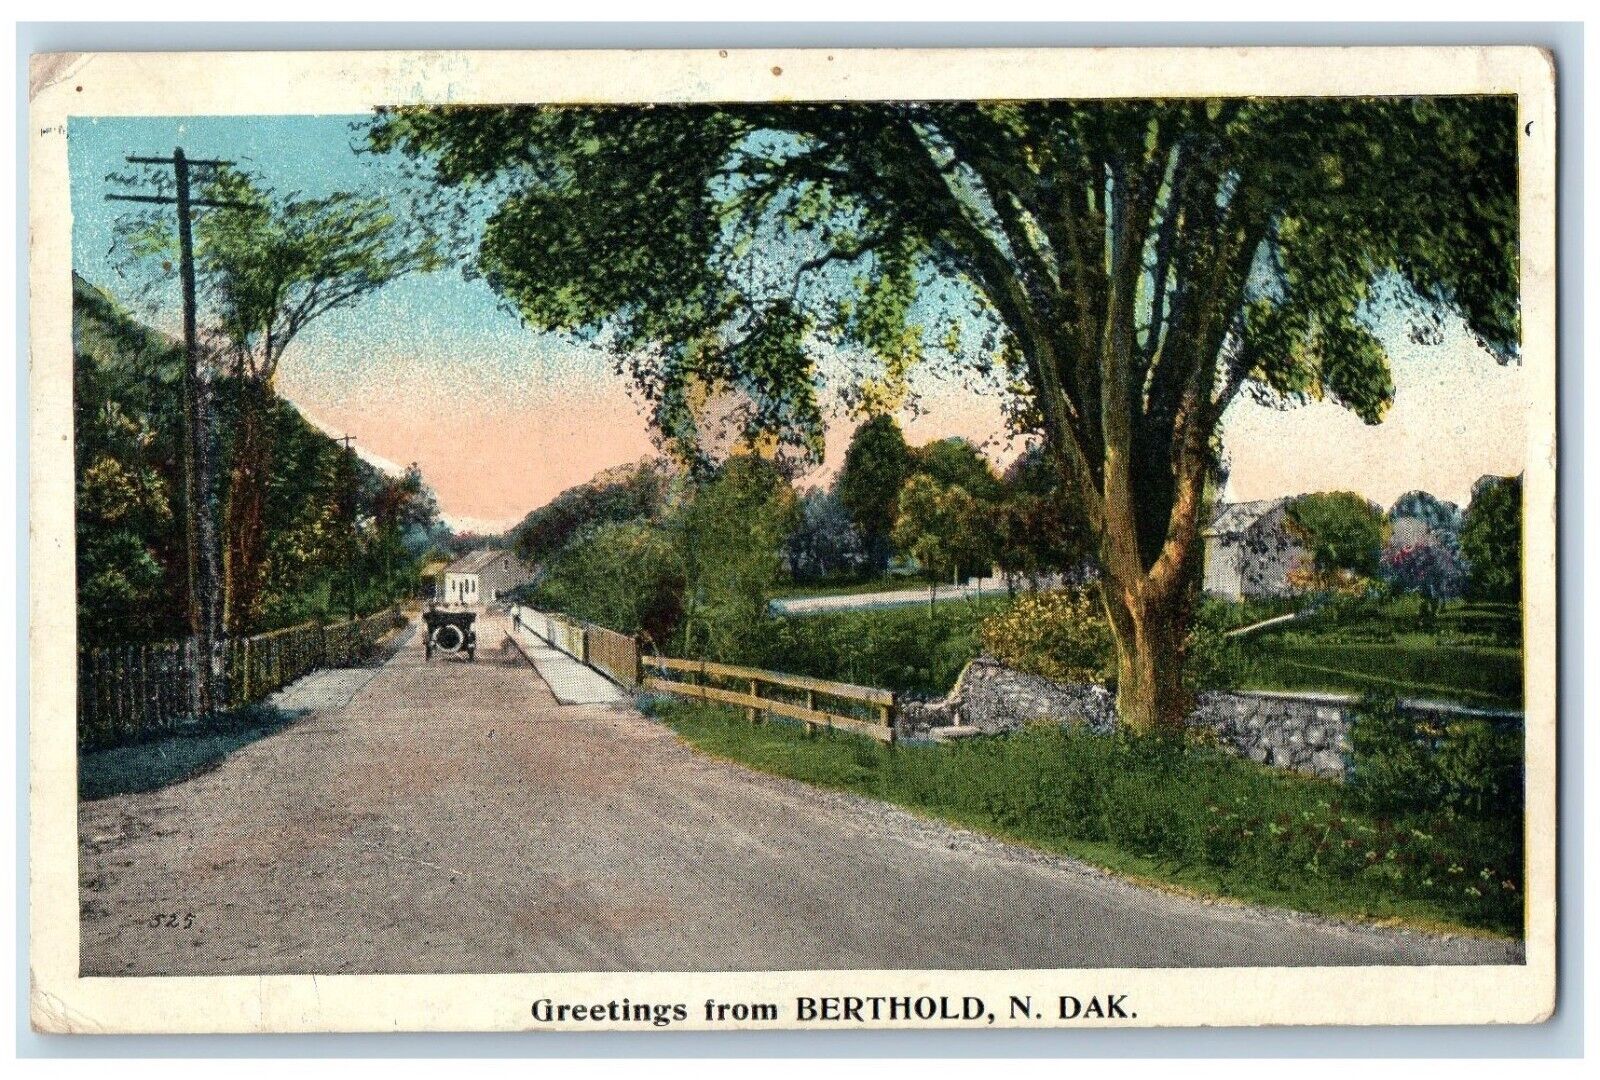 Berthold North Dakota Postcard Greetings Classic Car Bridge 1920 Vintage Antique